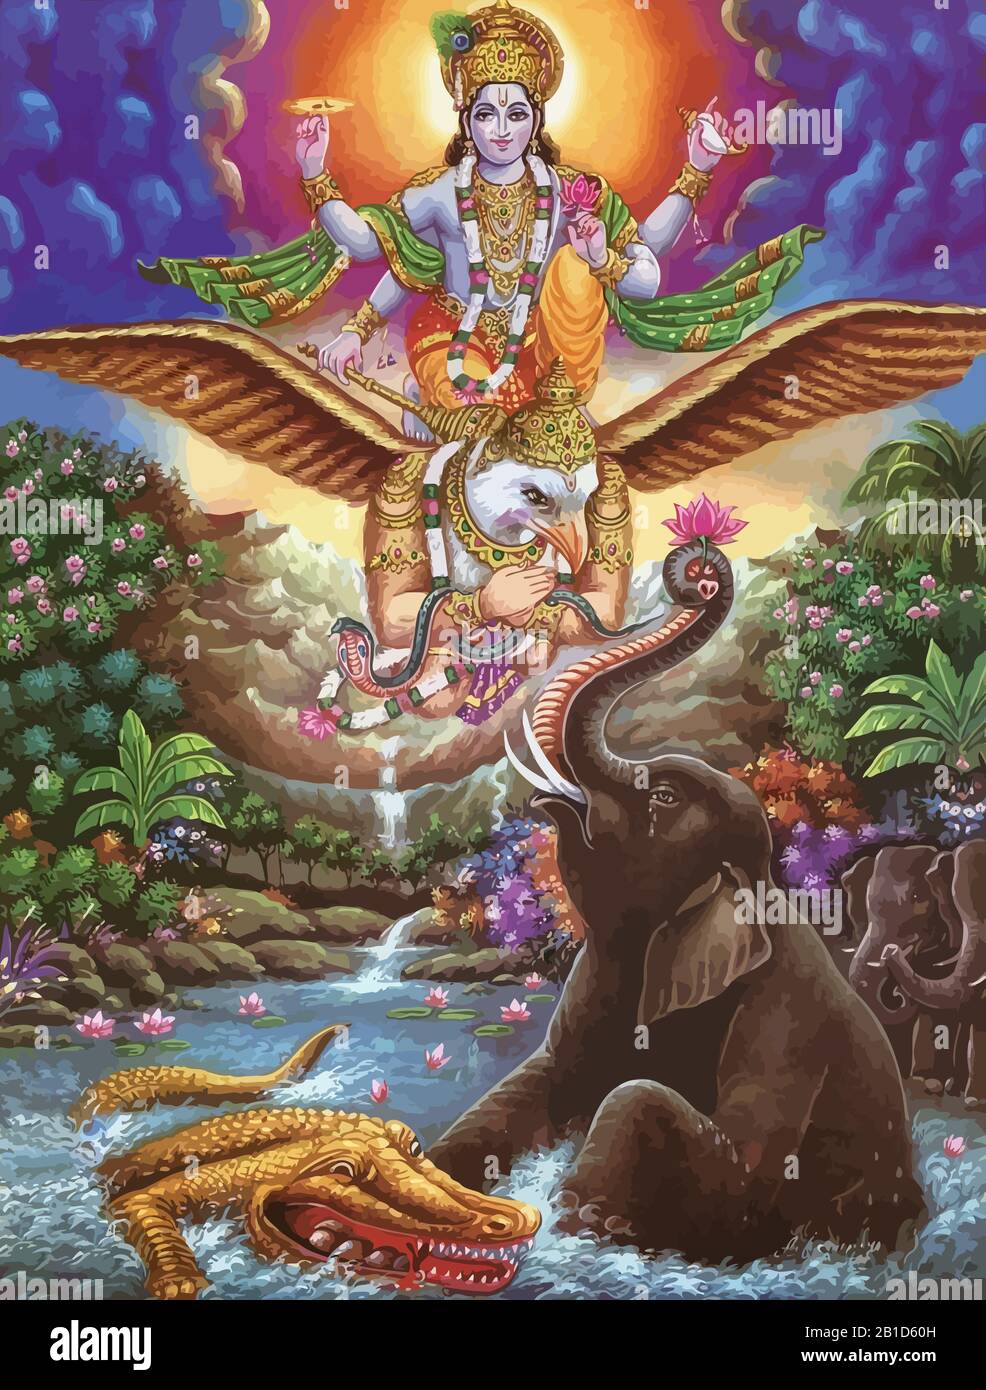 lord Rama flying bird hinduism spiritual illustration Stock Photo ...